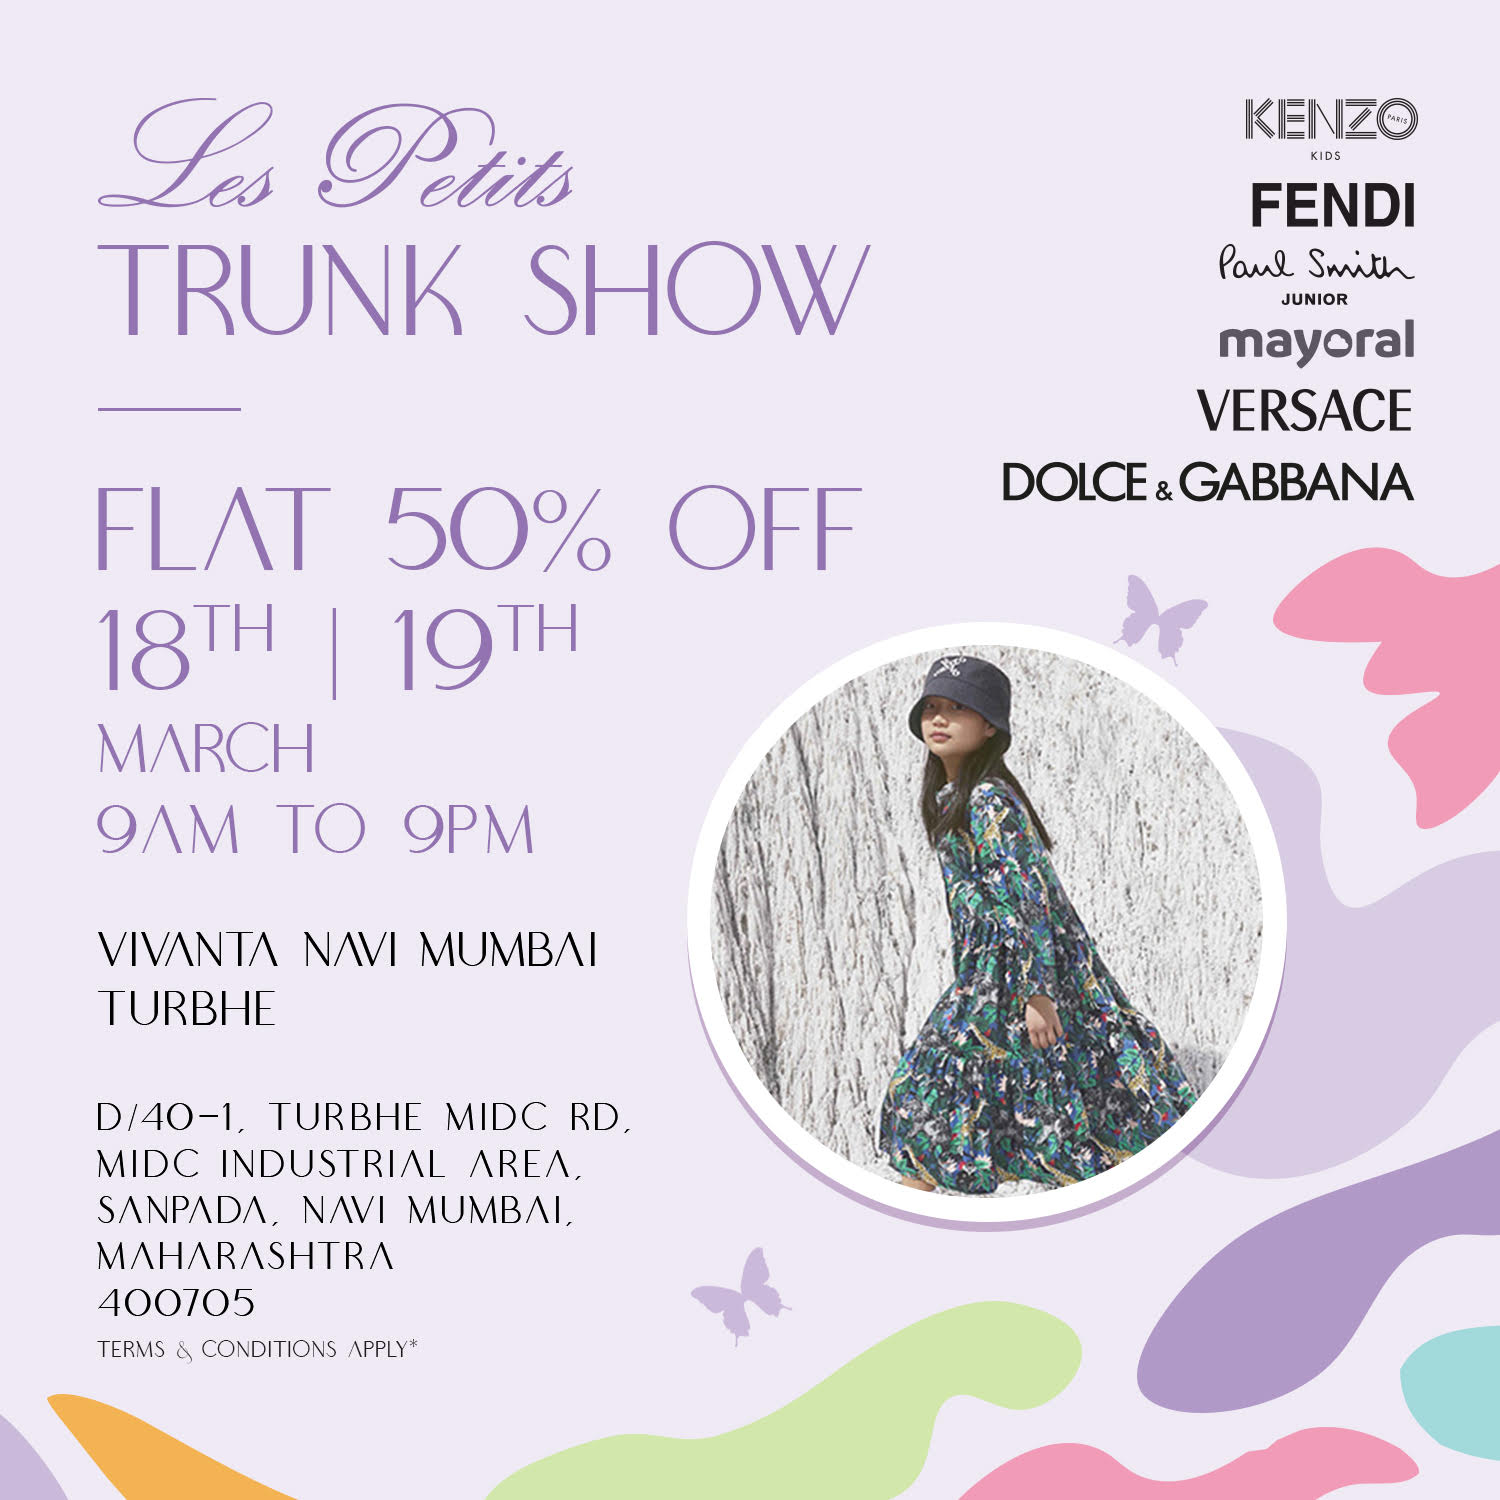 Les Petits to host Trunk Show Exhibition at Vivanta, Navi Mumbai., 18th & 19th March